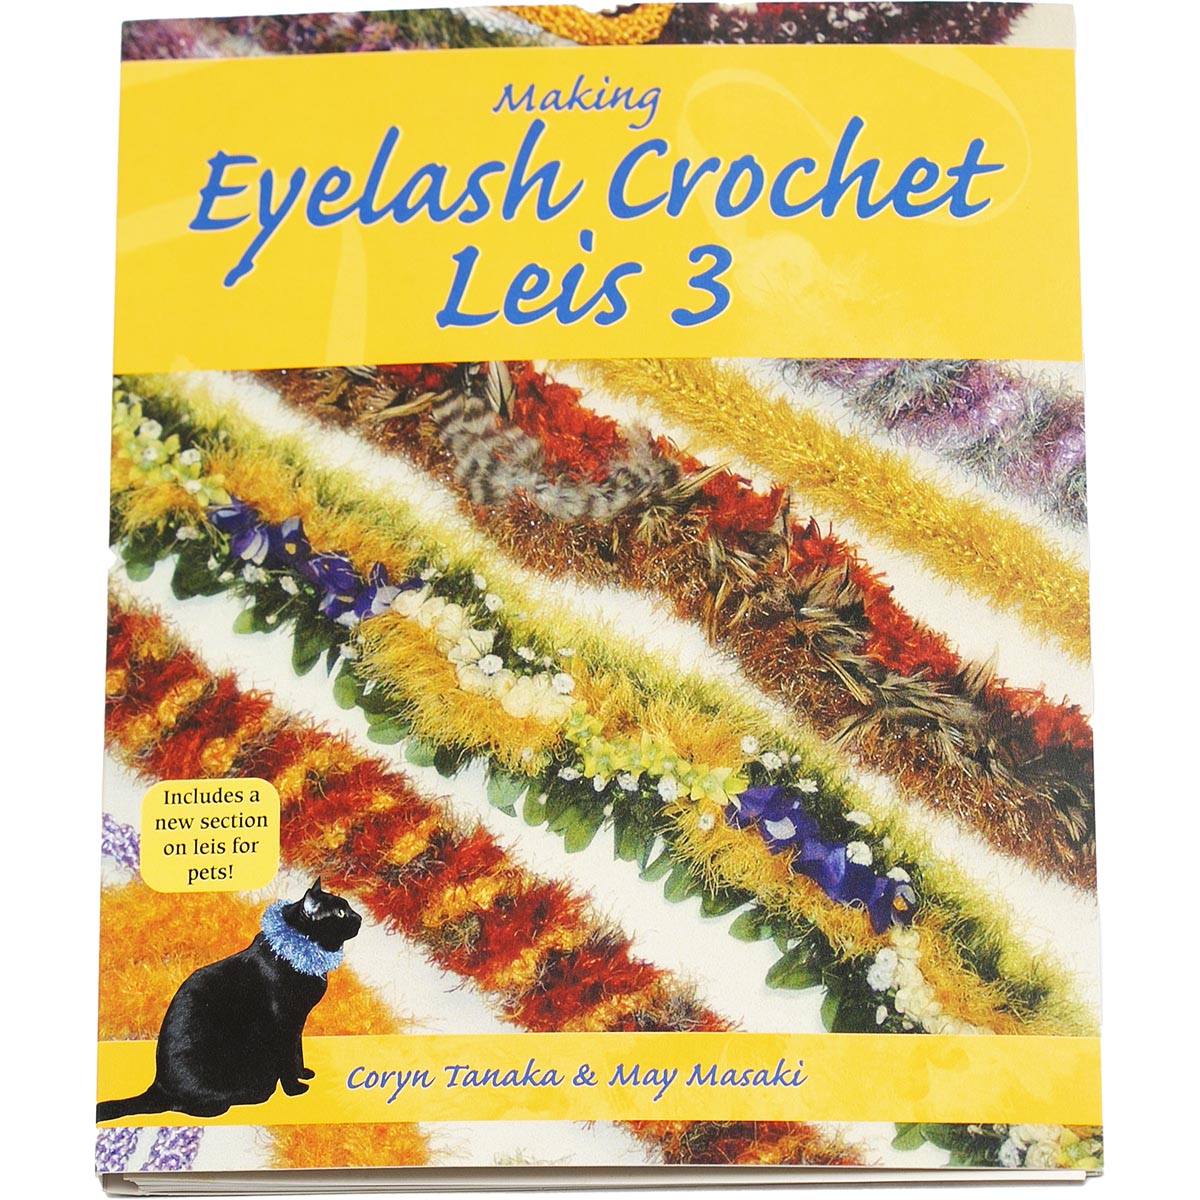 Making Eyelash Crochet Leis 3